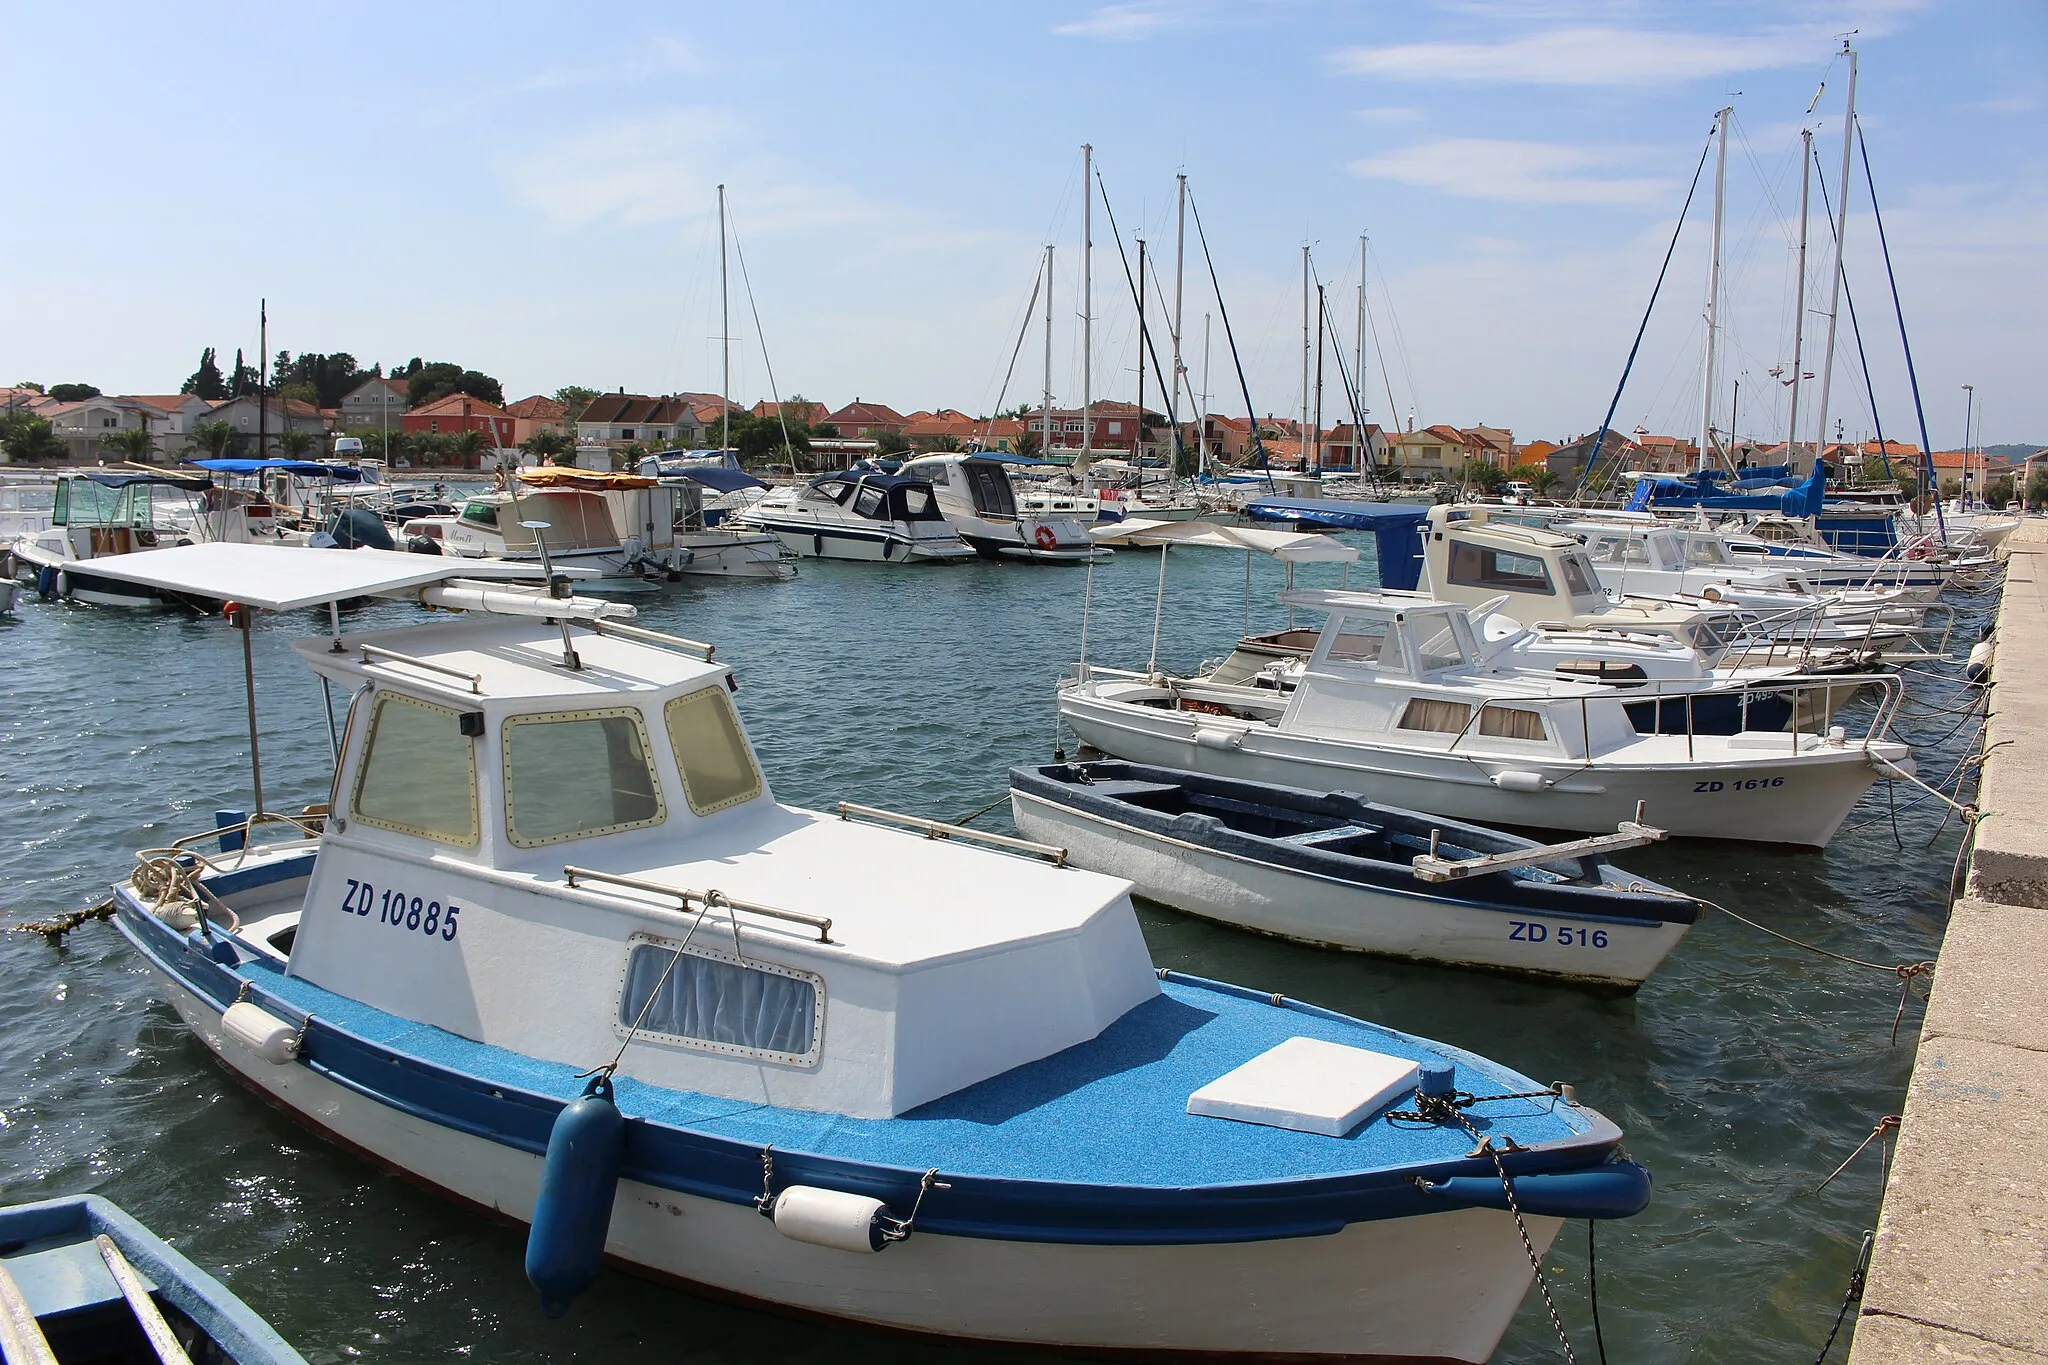 Photo showing: Причал яхт около поселка Бибинье (Bibinje). Хорватия.